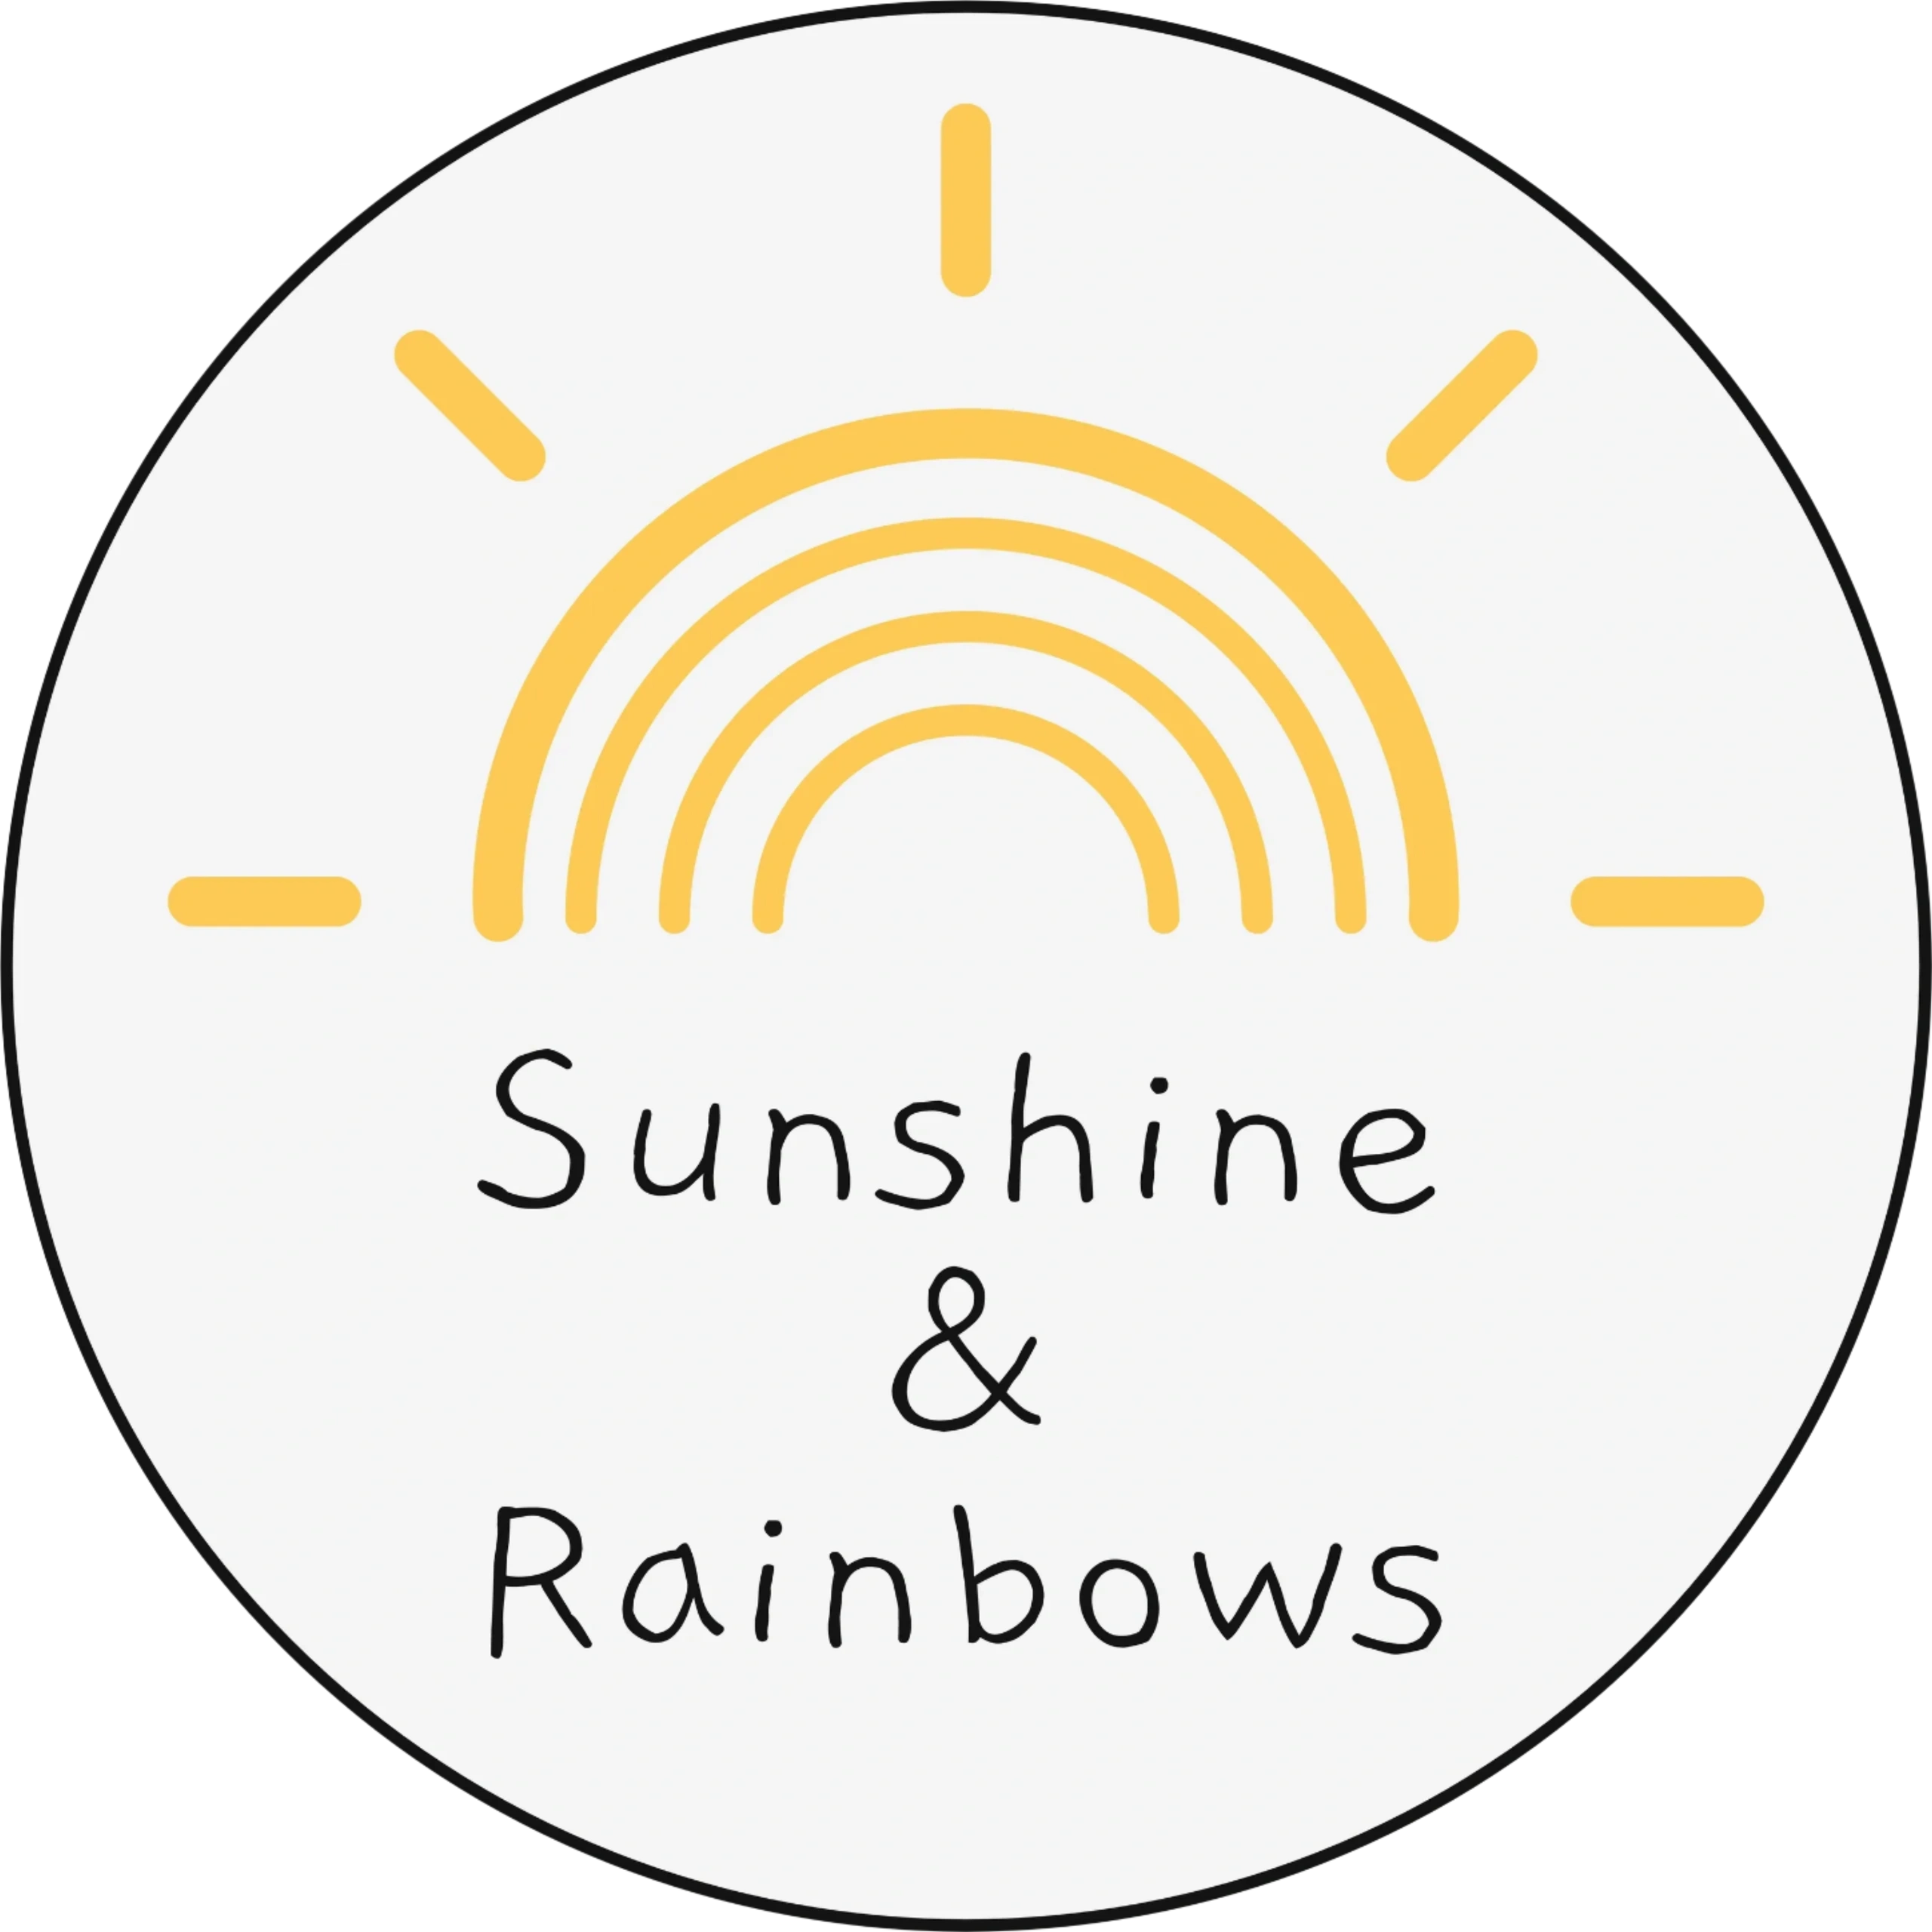 Sunshine  Rainbows logo
Yellow sunshine
Yellow rainbow on white background
Black text
Adoption gifts